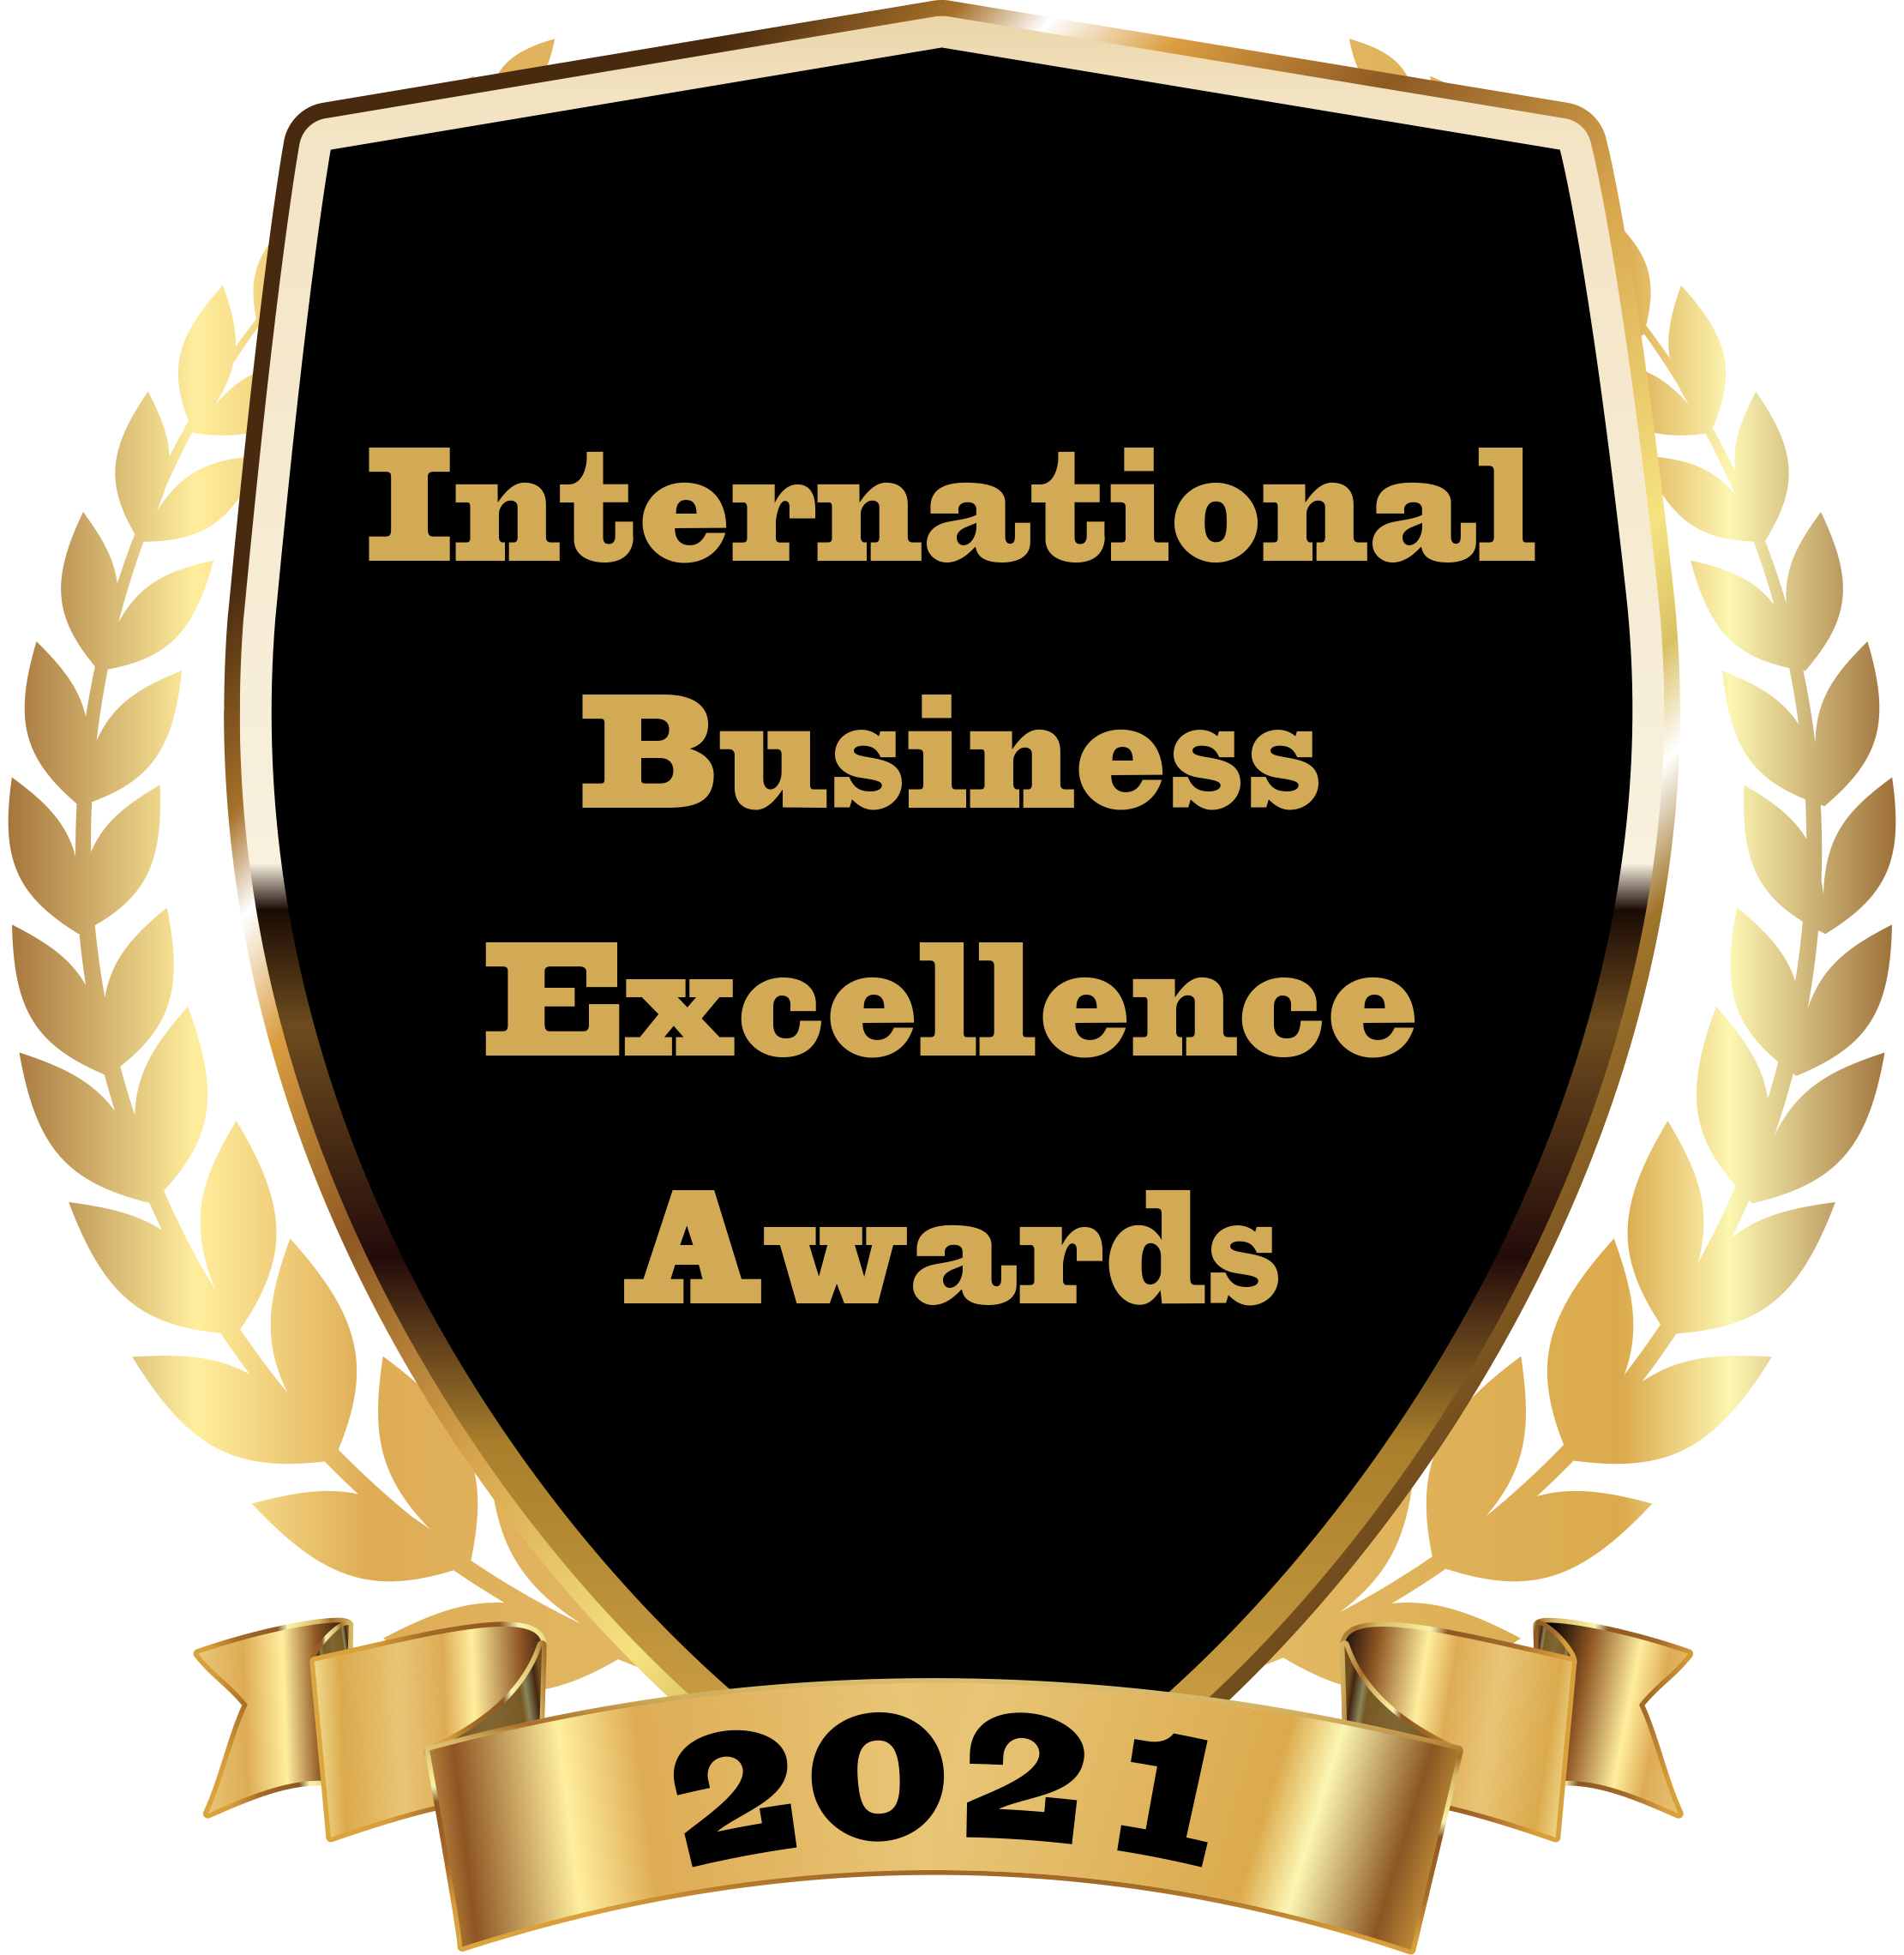 International Business Excellence Awards 2021 | An Online Reward & Recognition Initiativ